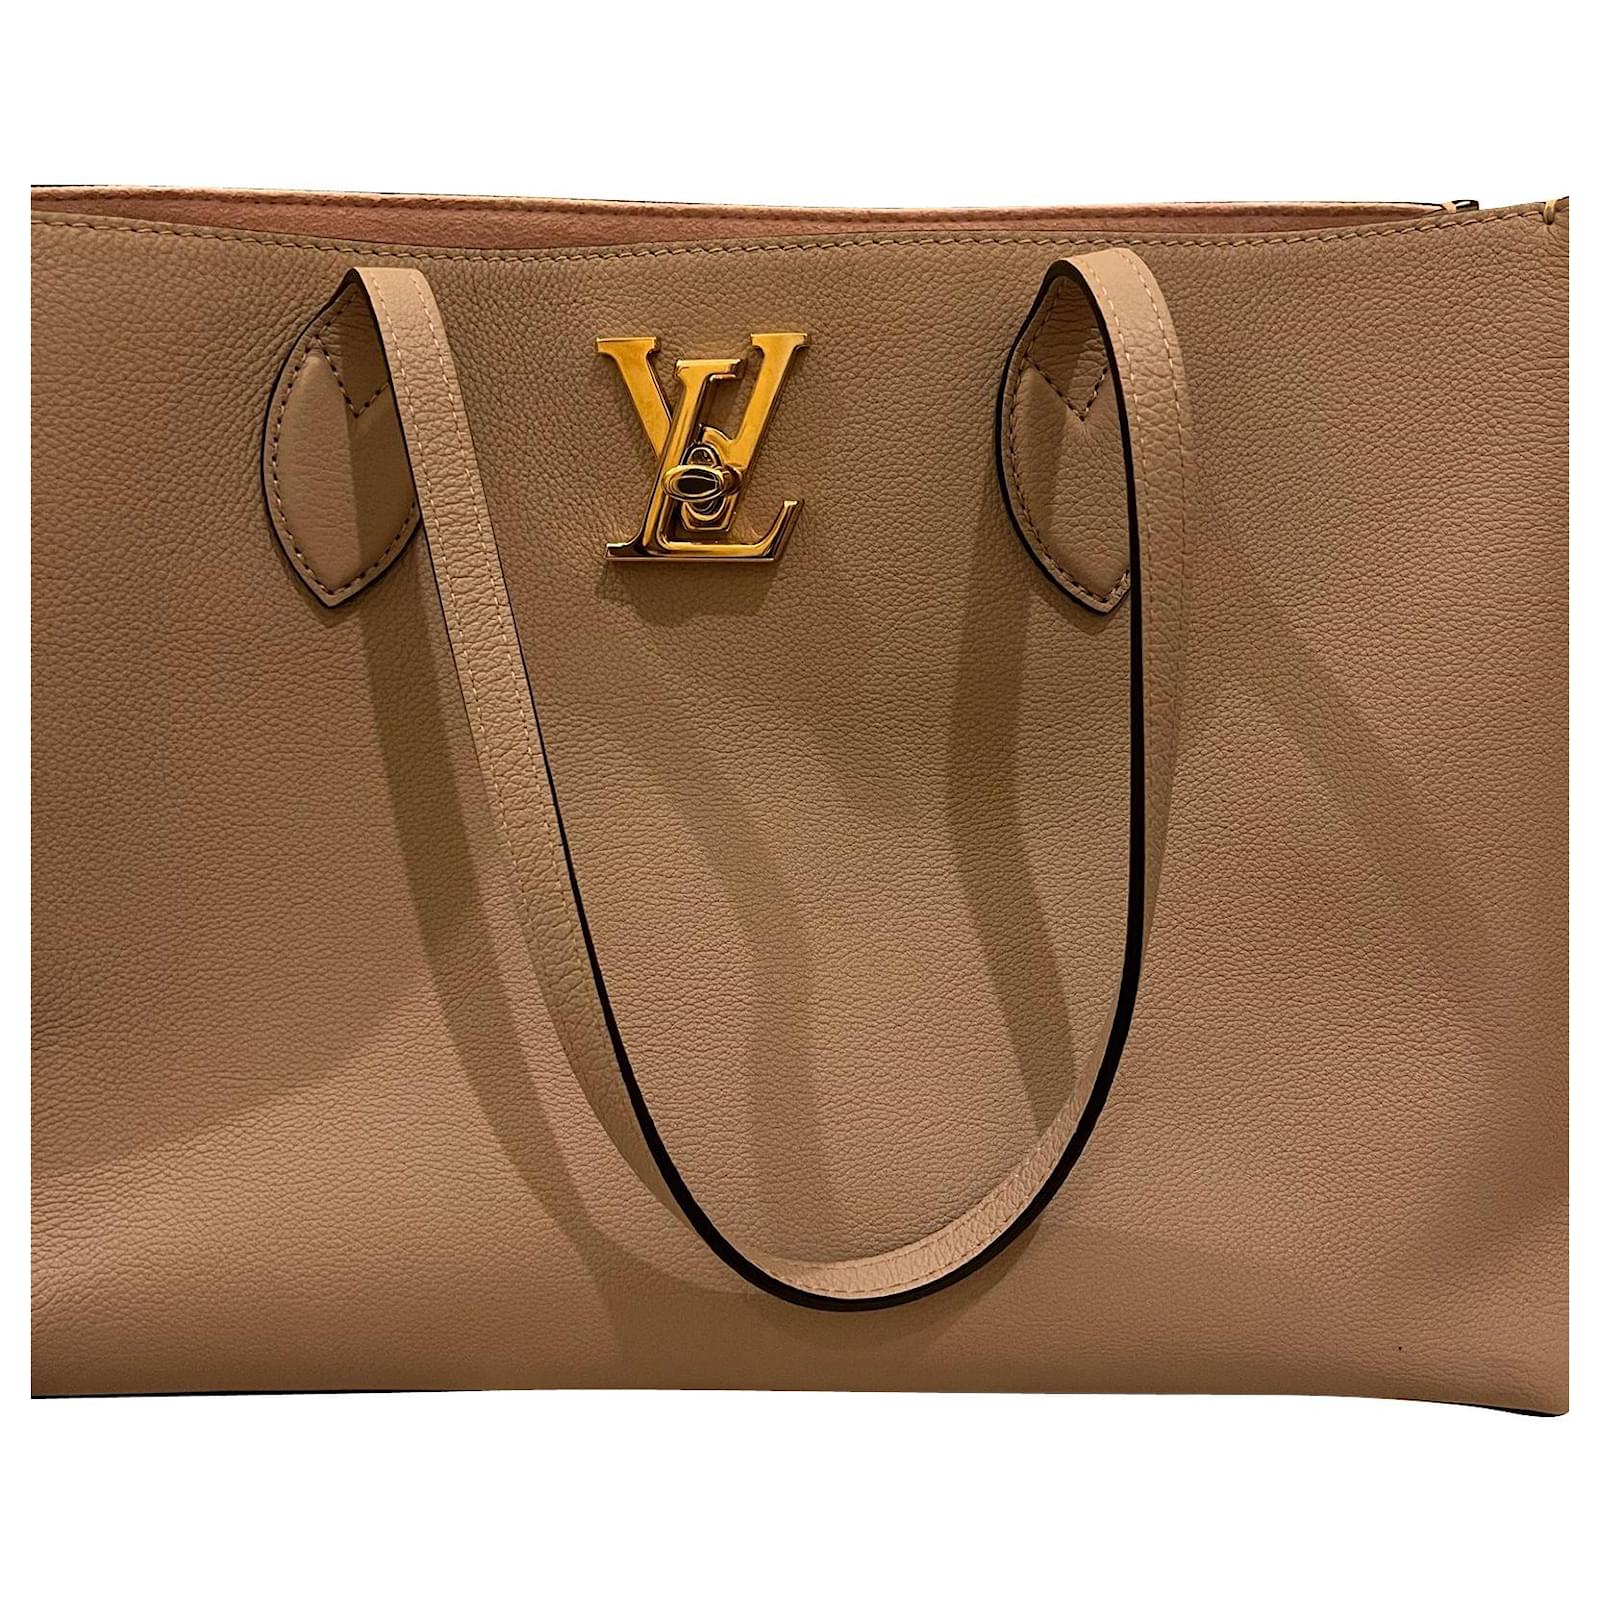 Louis Vuitton Lockme Shopper Tote Bag